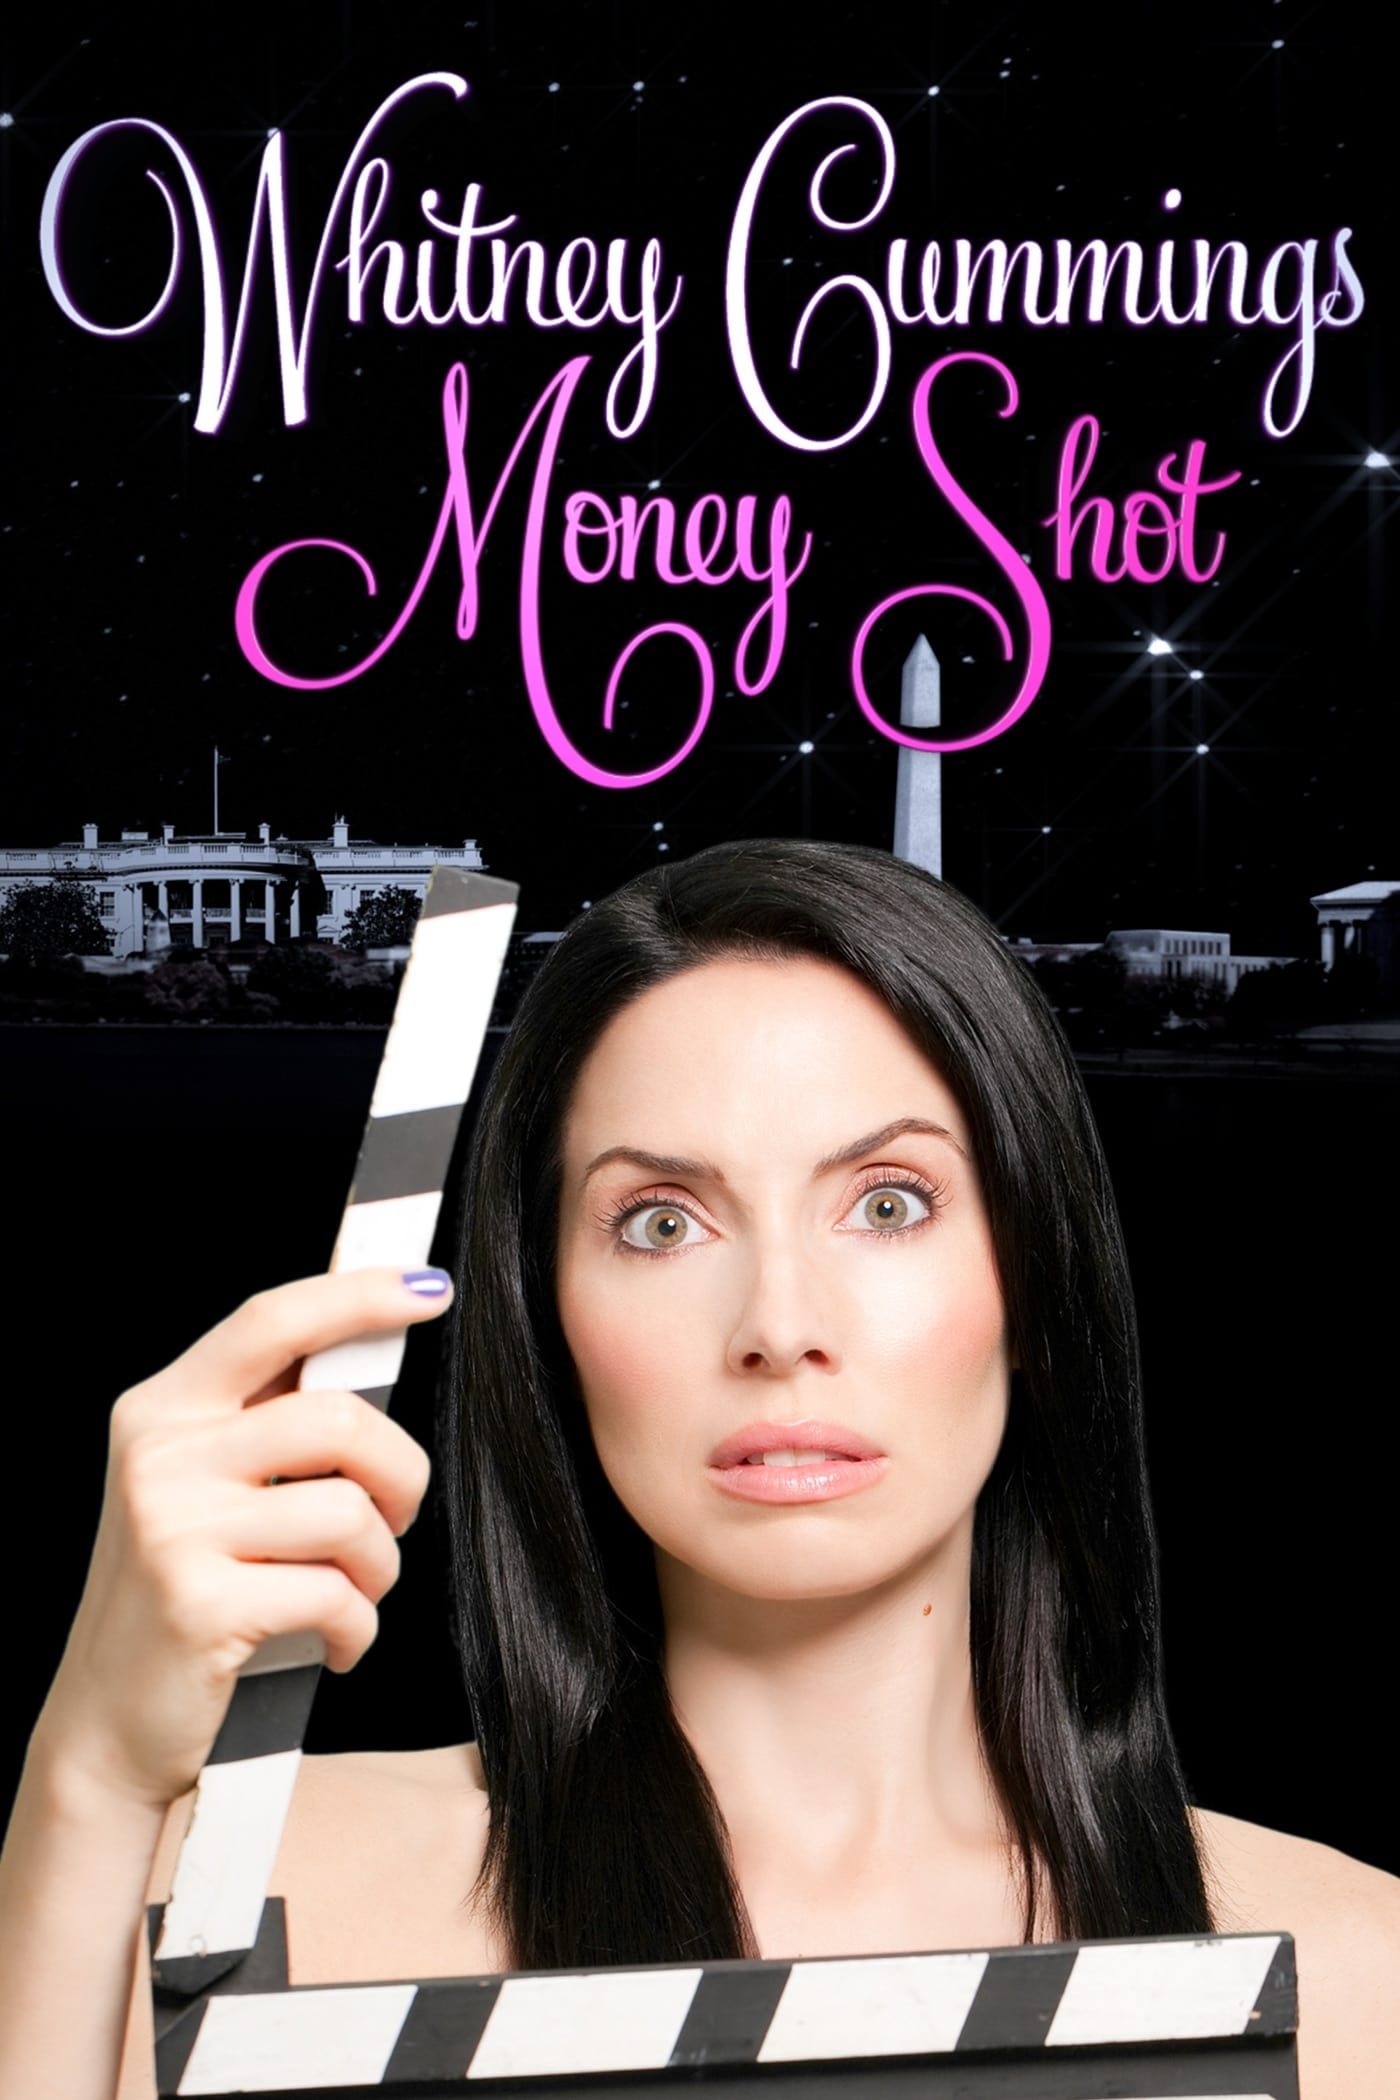 Whitney Cummings: Money Shot